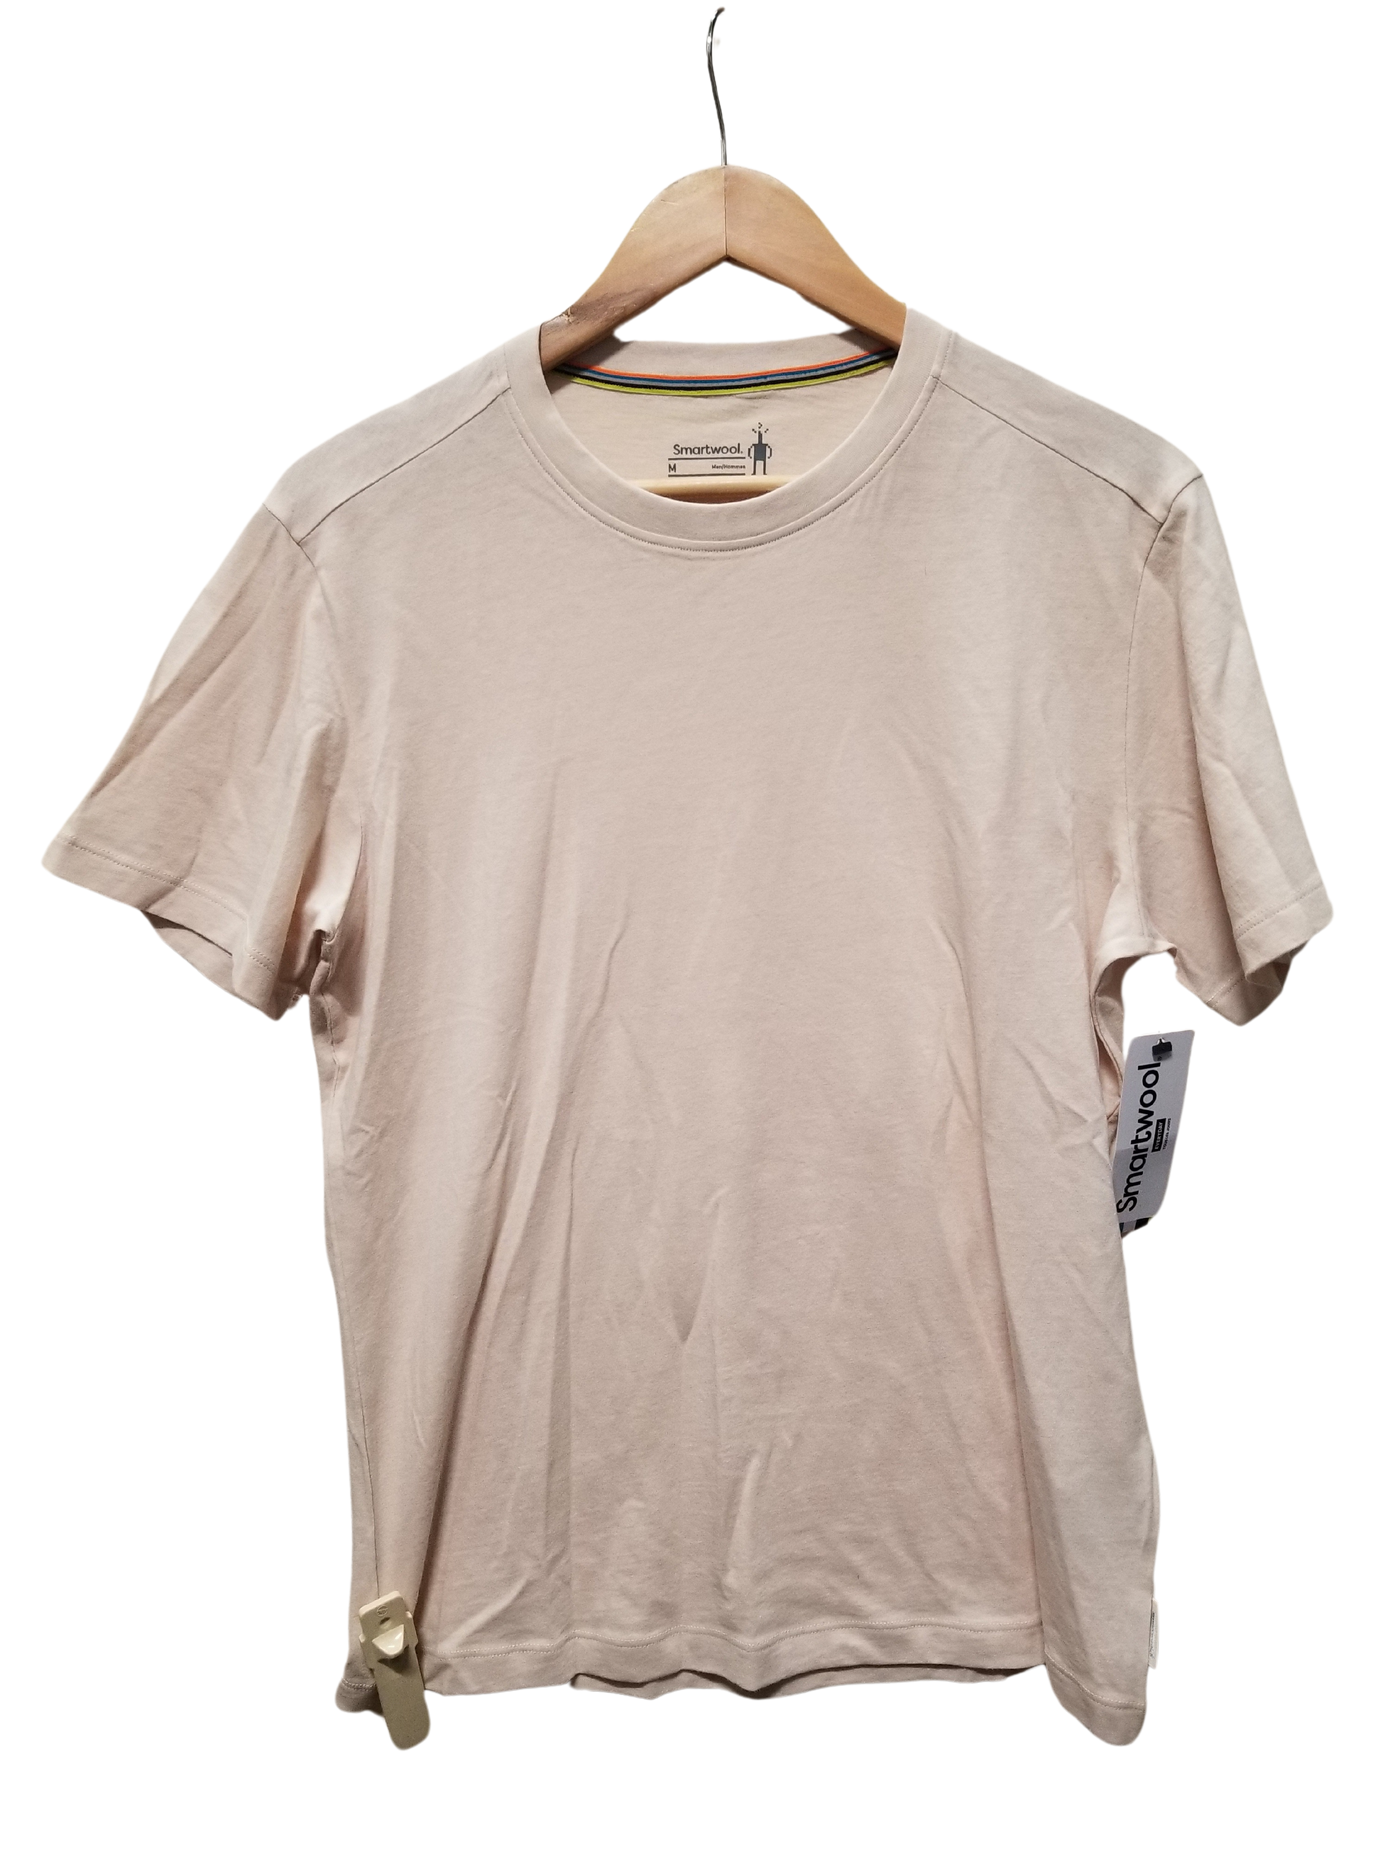 T-Shirt Smartwool Manches Courtes Slim Hommes - Plein Air Entrepôt